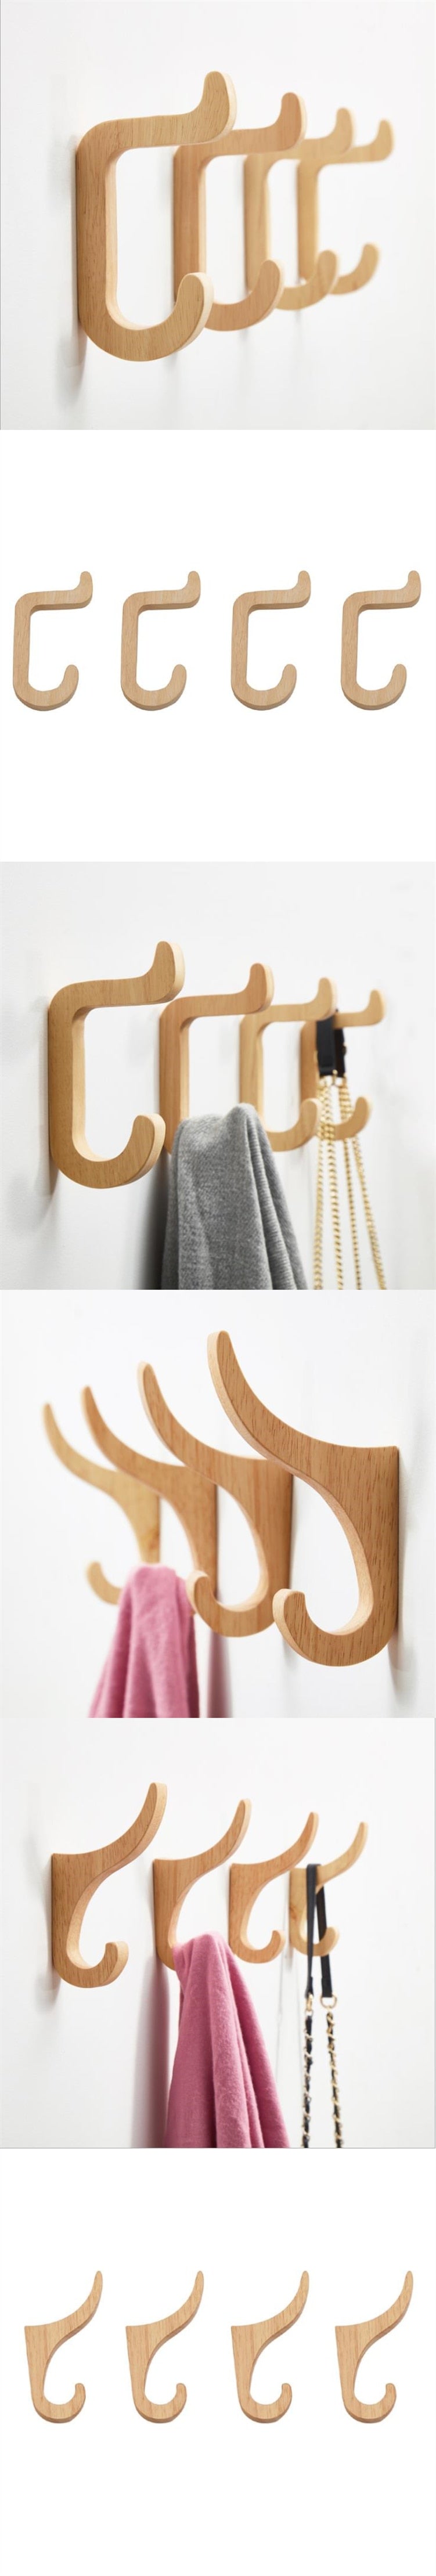 wall coat rack